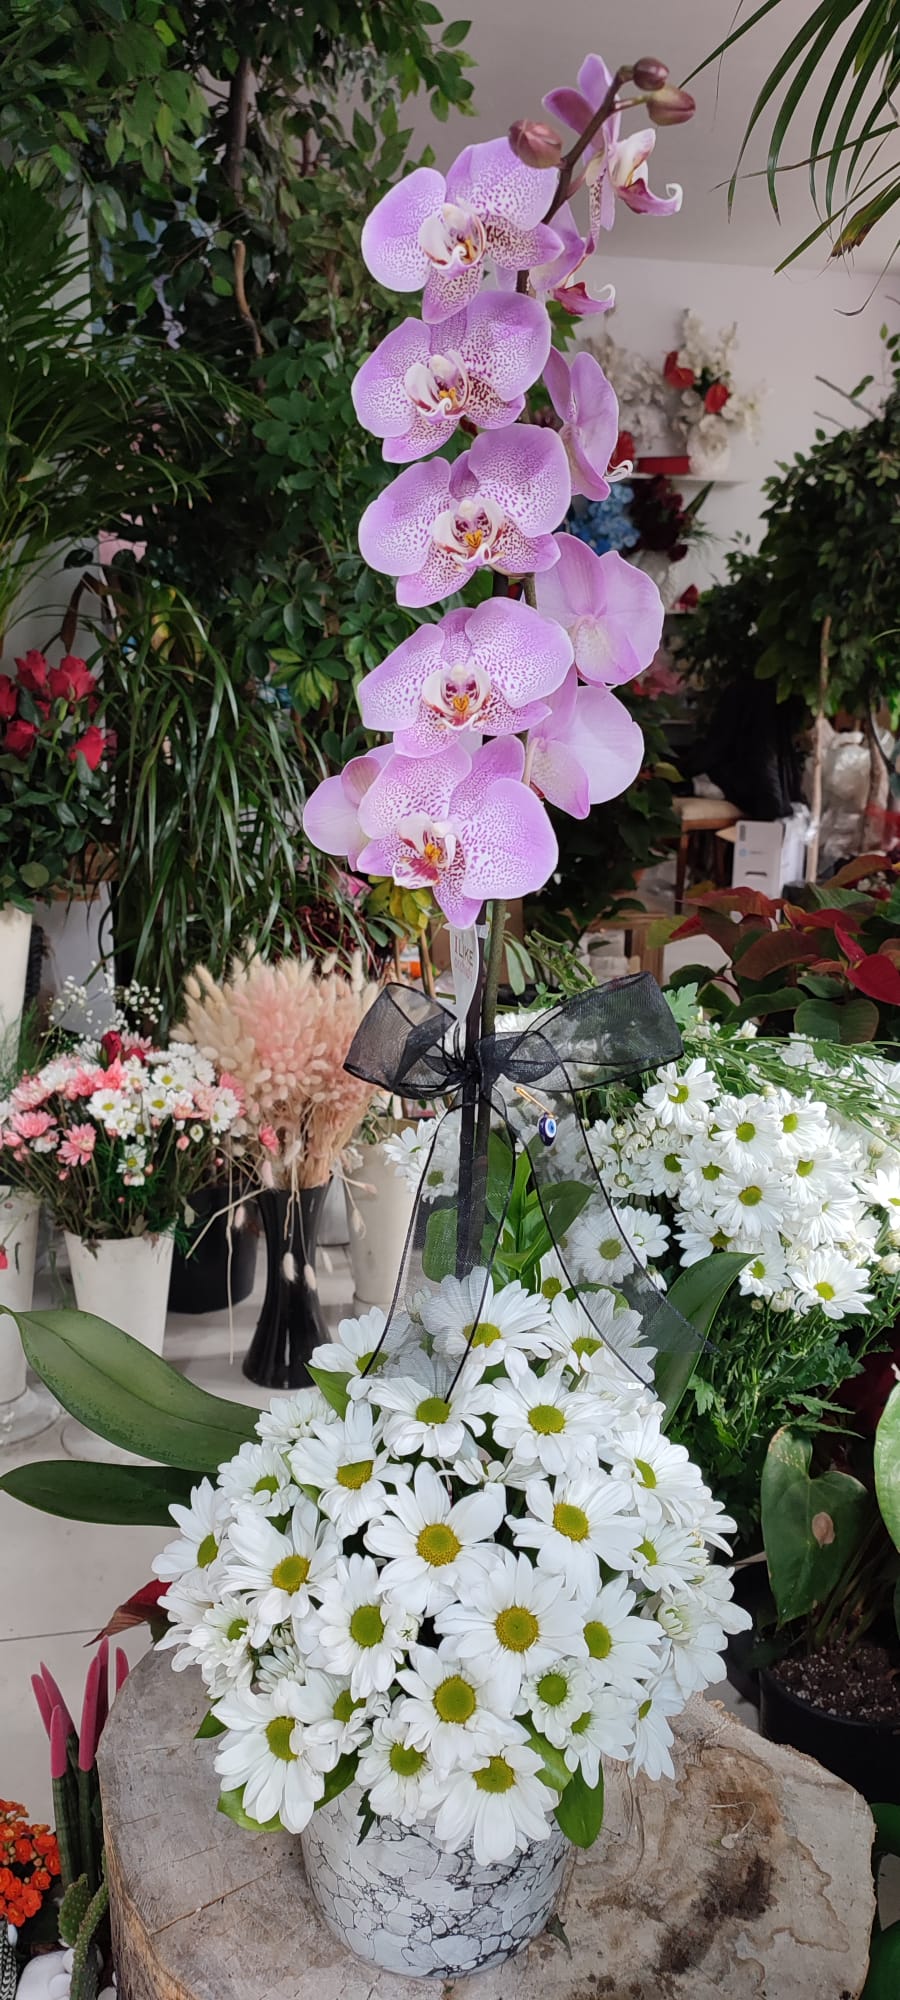 Orkideli Papatya Arajmanı